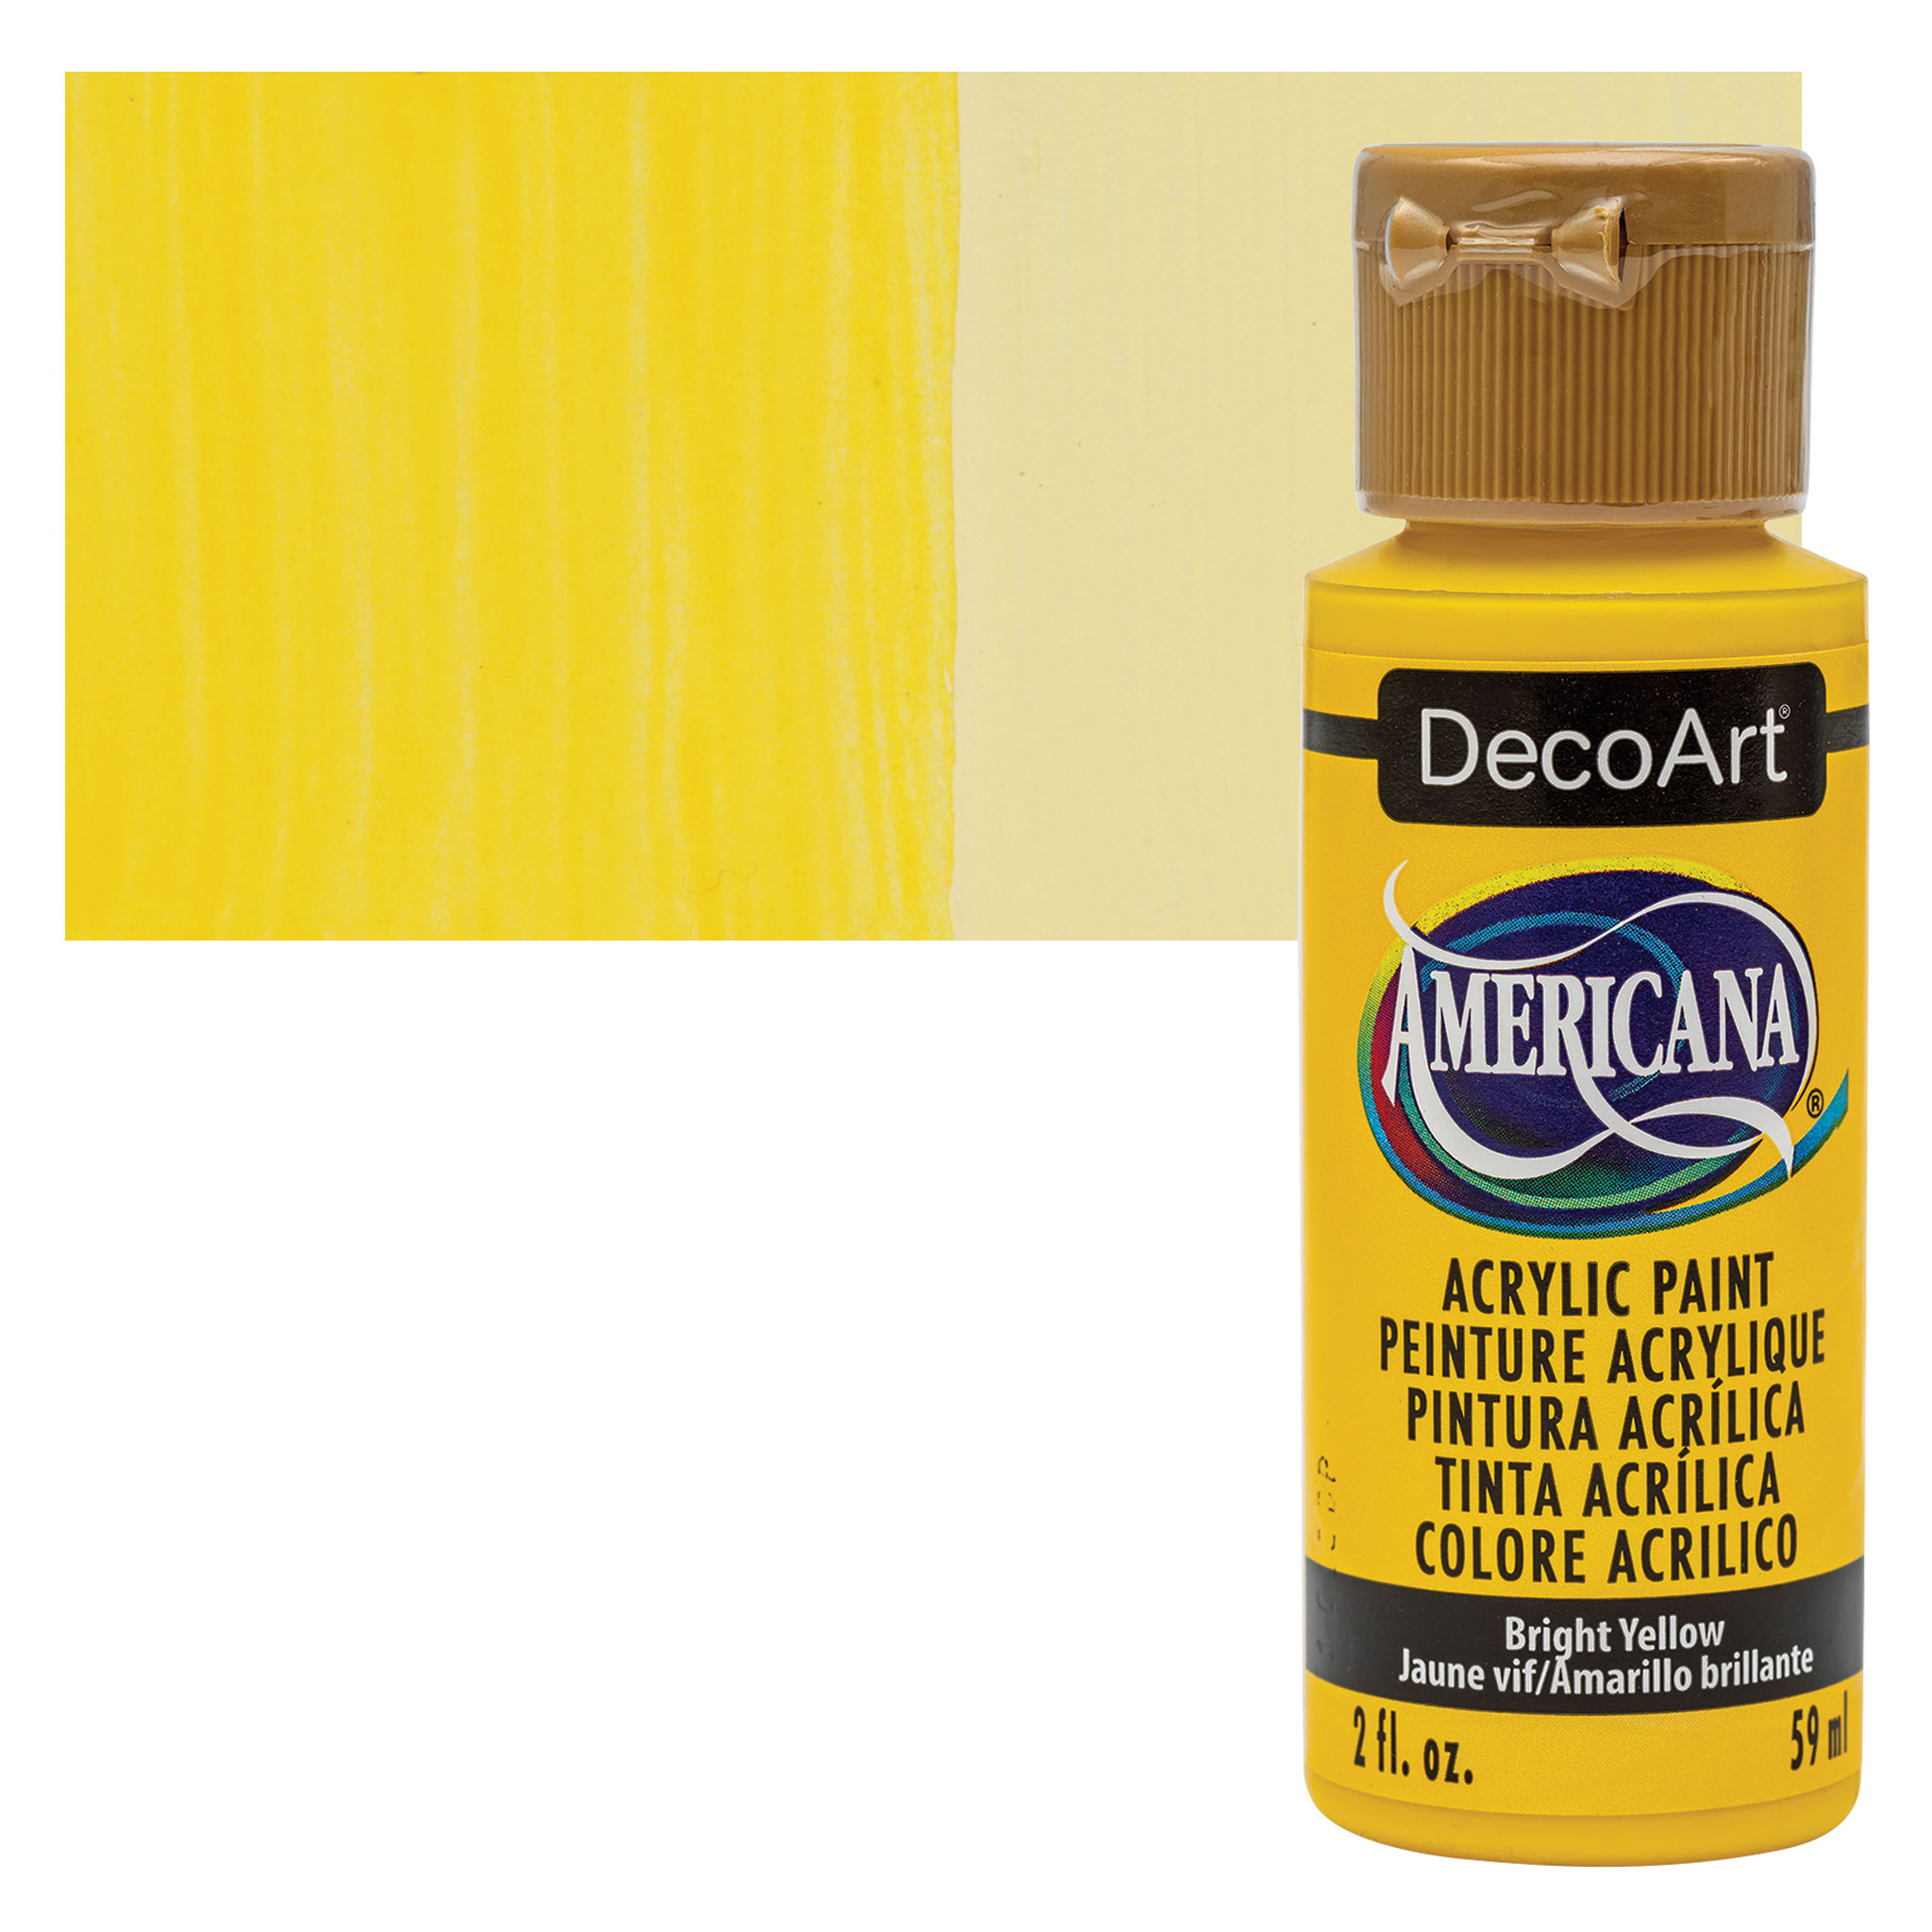 DecoArt Acrylic Paint Primary Yellow 8 oz - Gaunt Industries